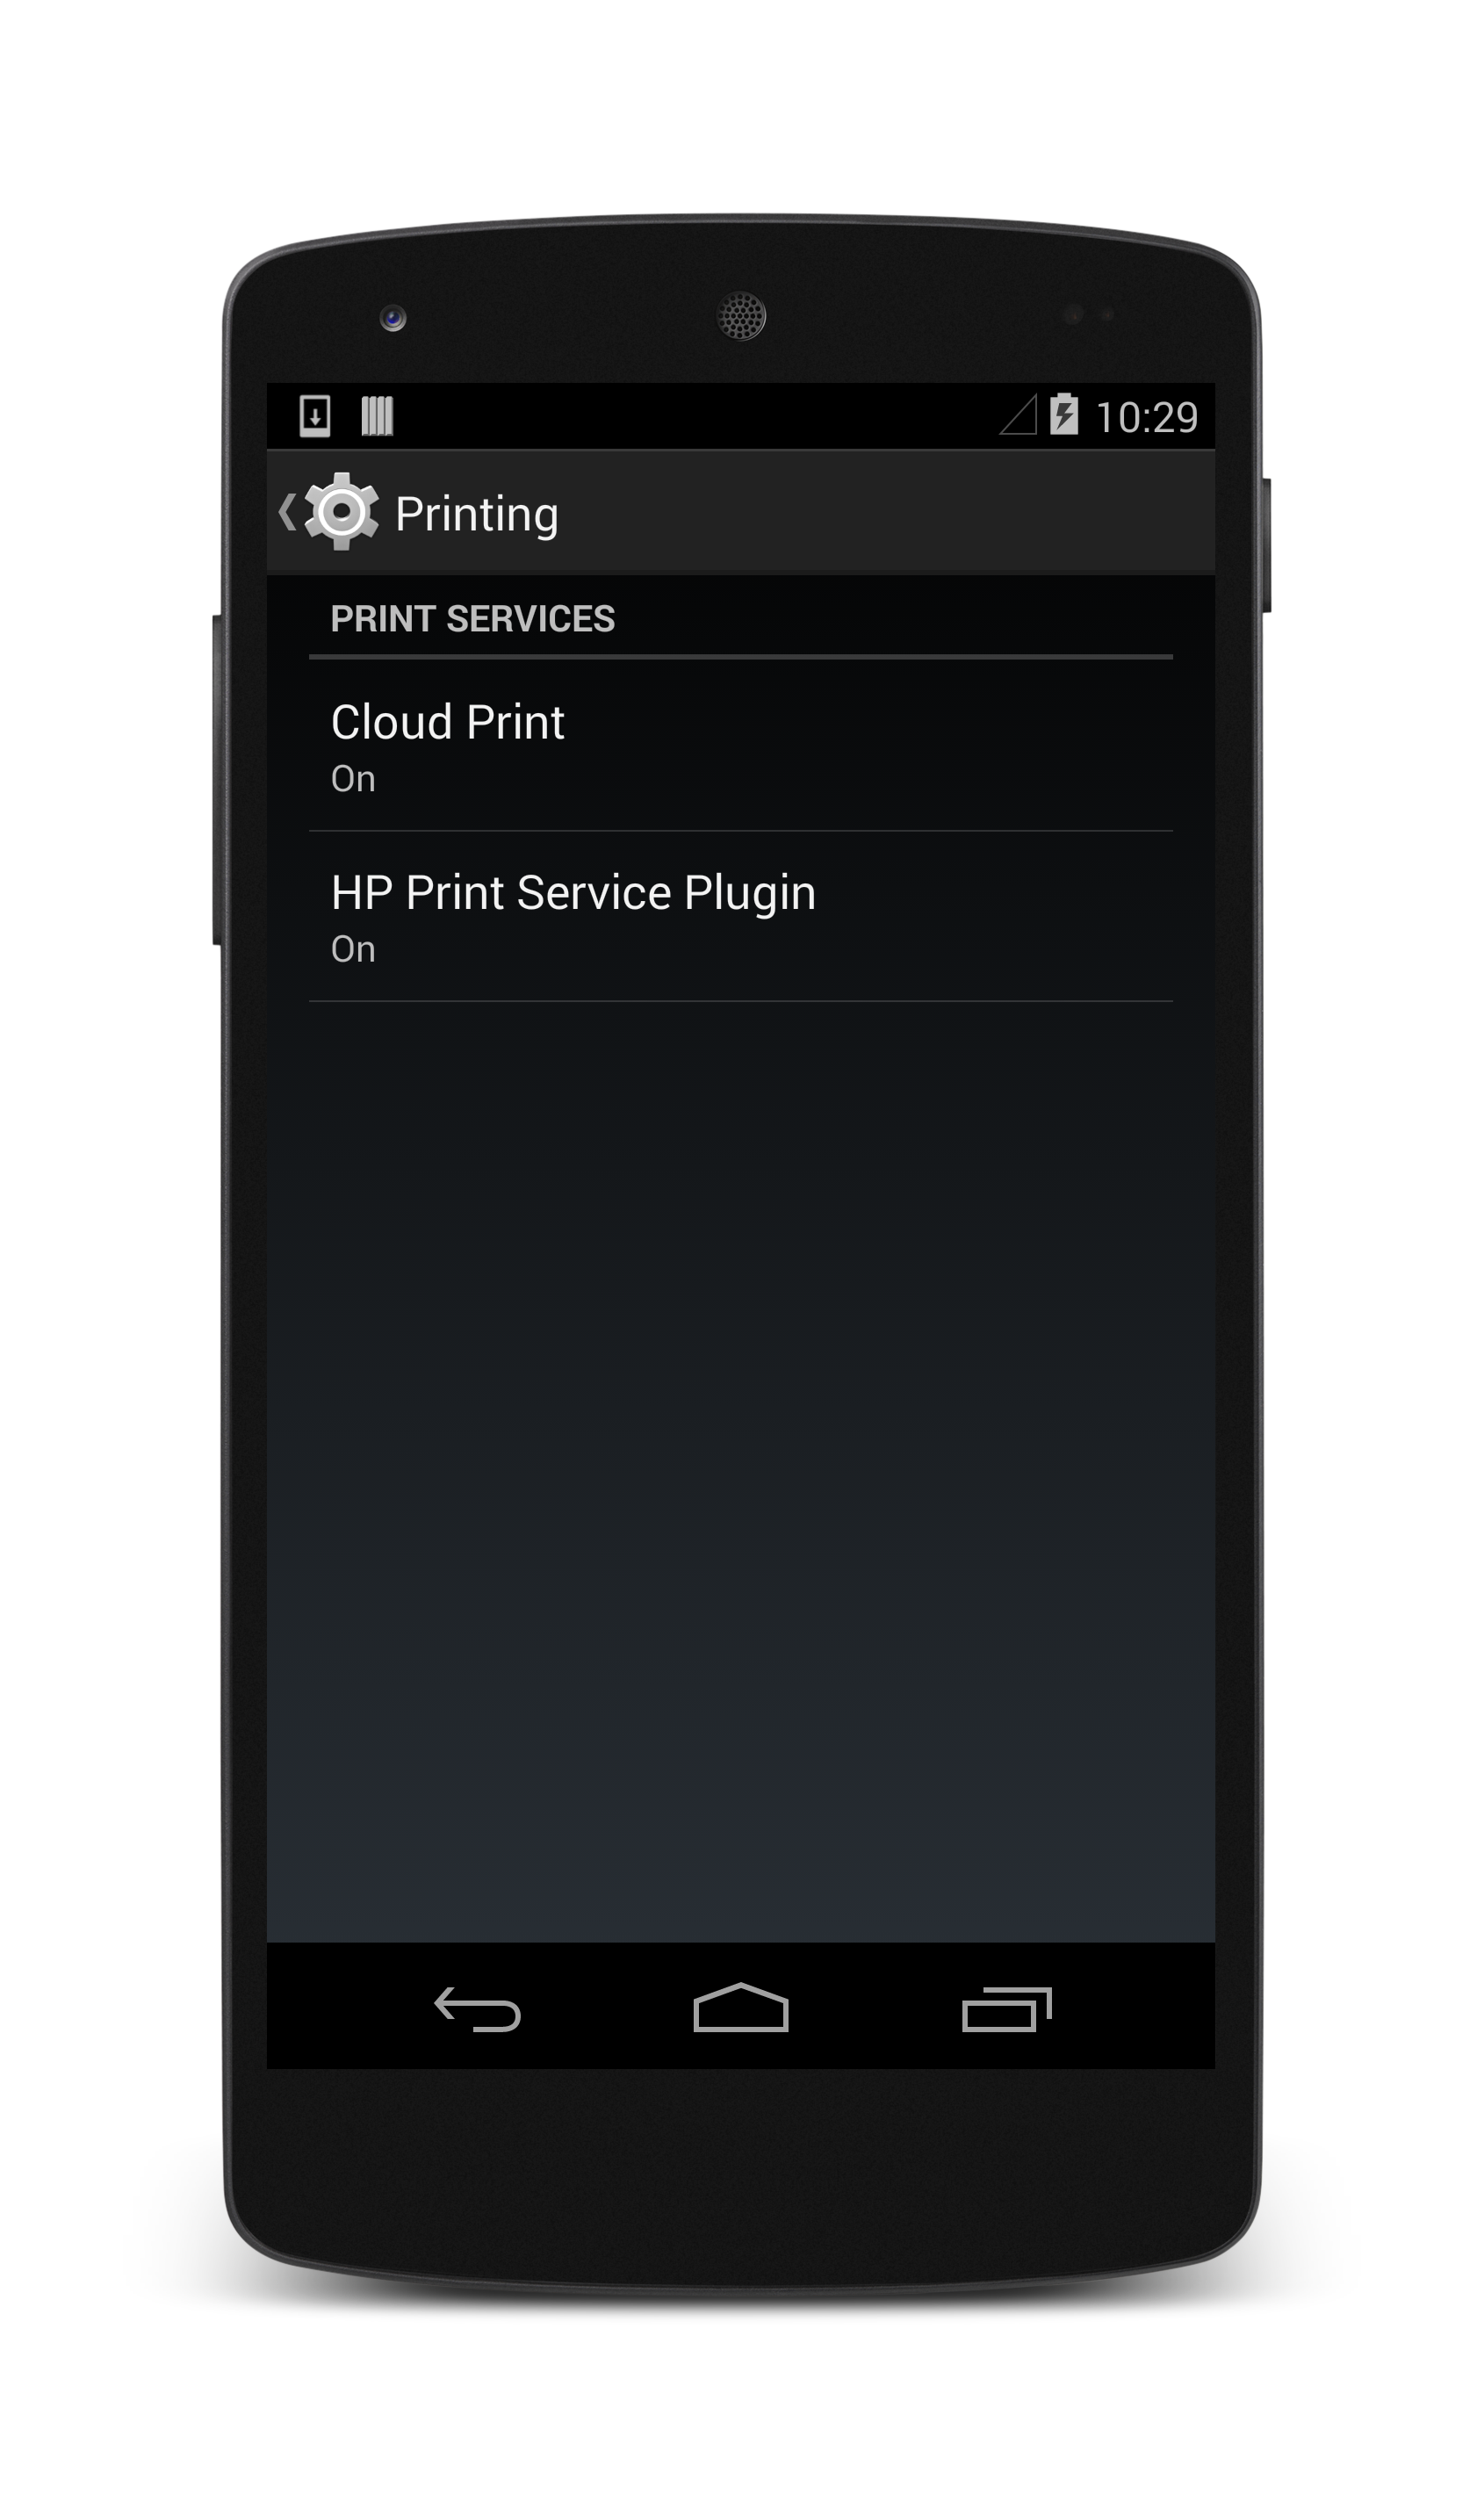 Example screenshot of the Print settings screen